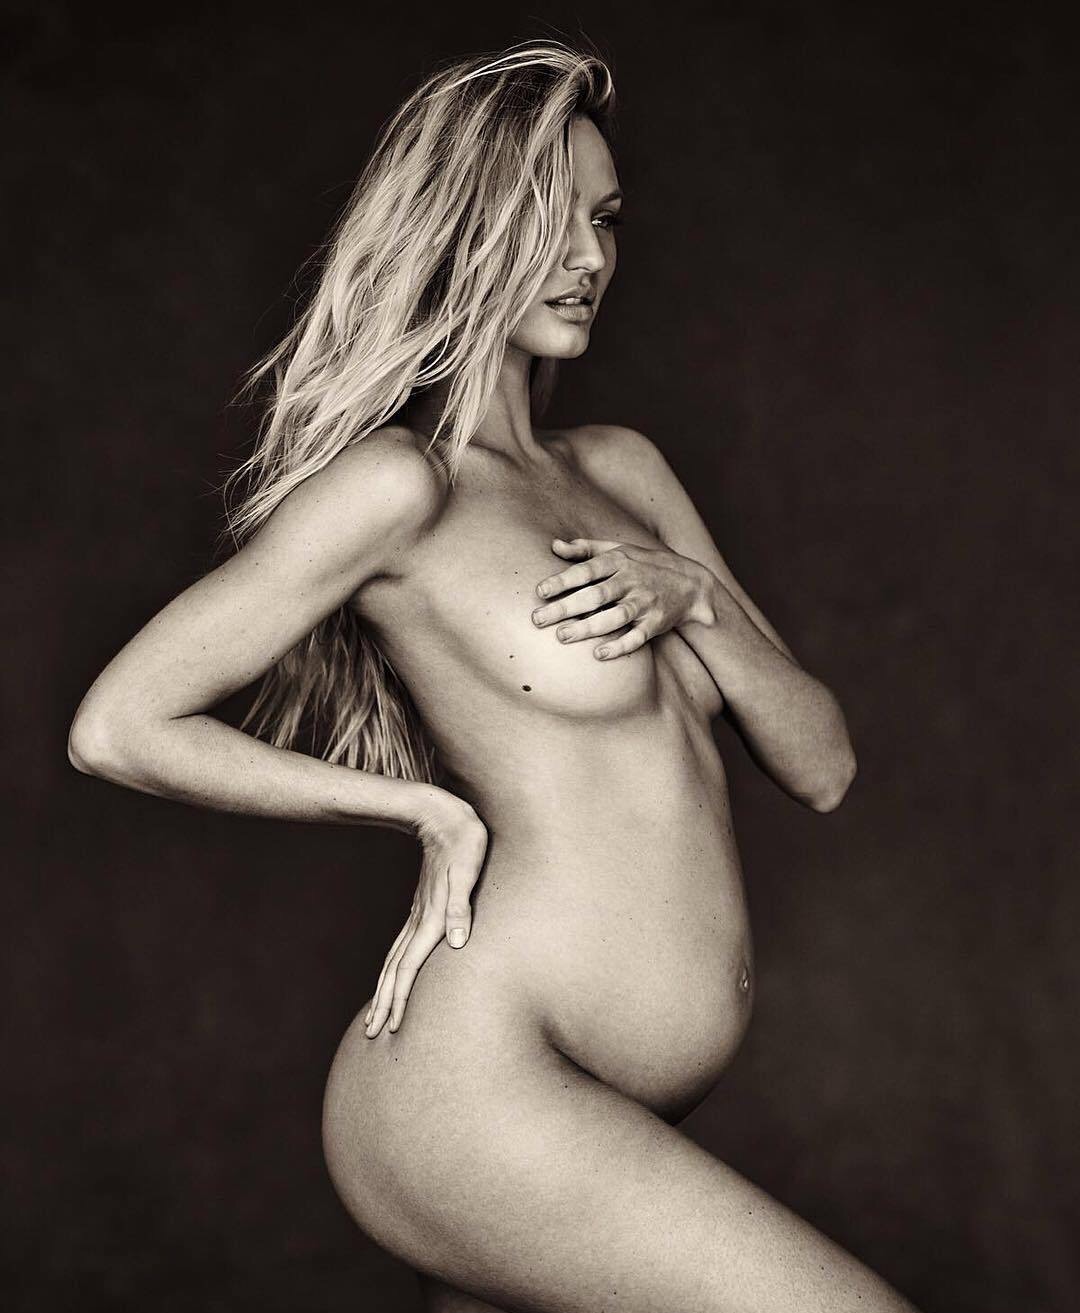 Katy perry pregnant and hard nipples bikini photos